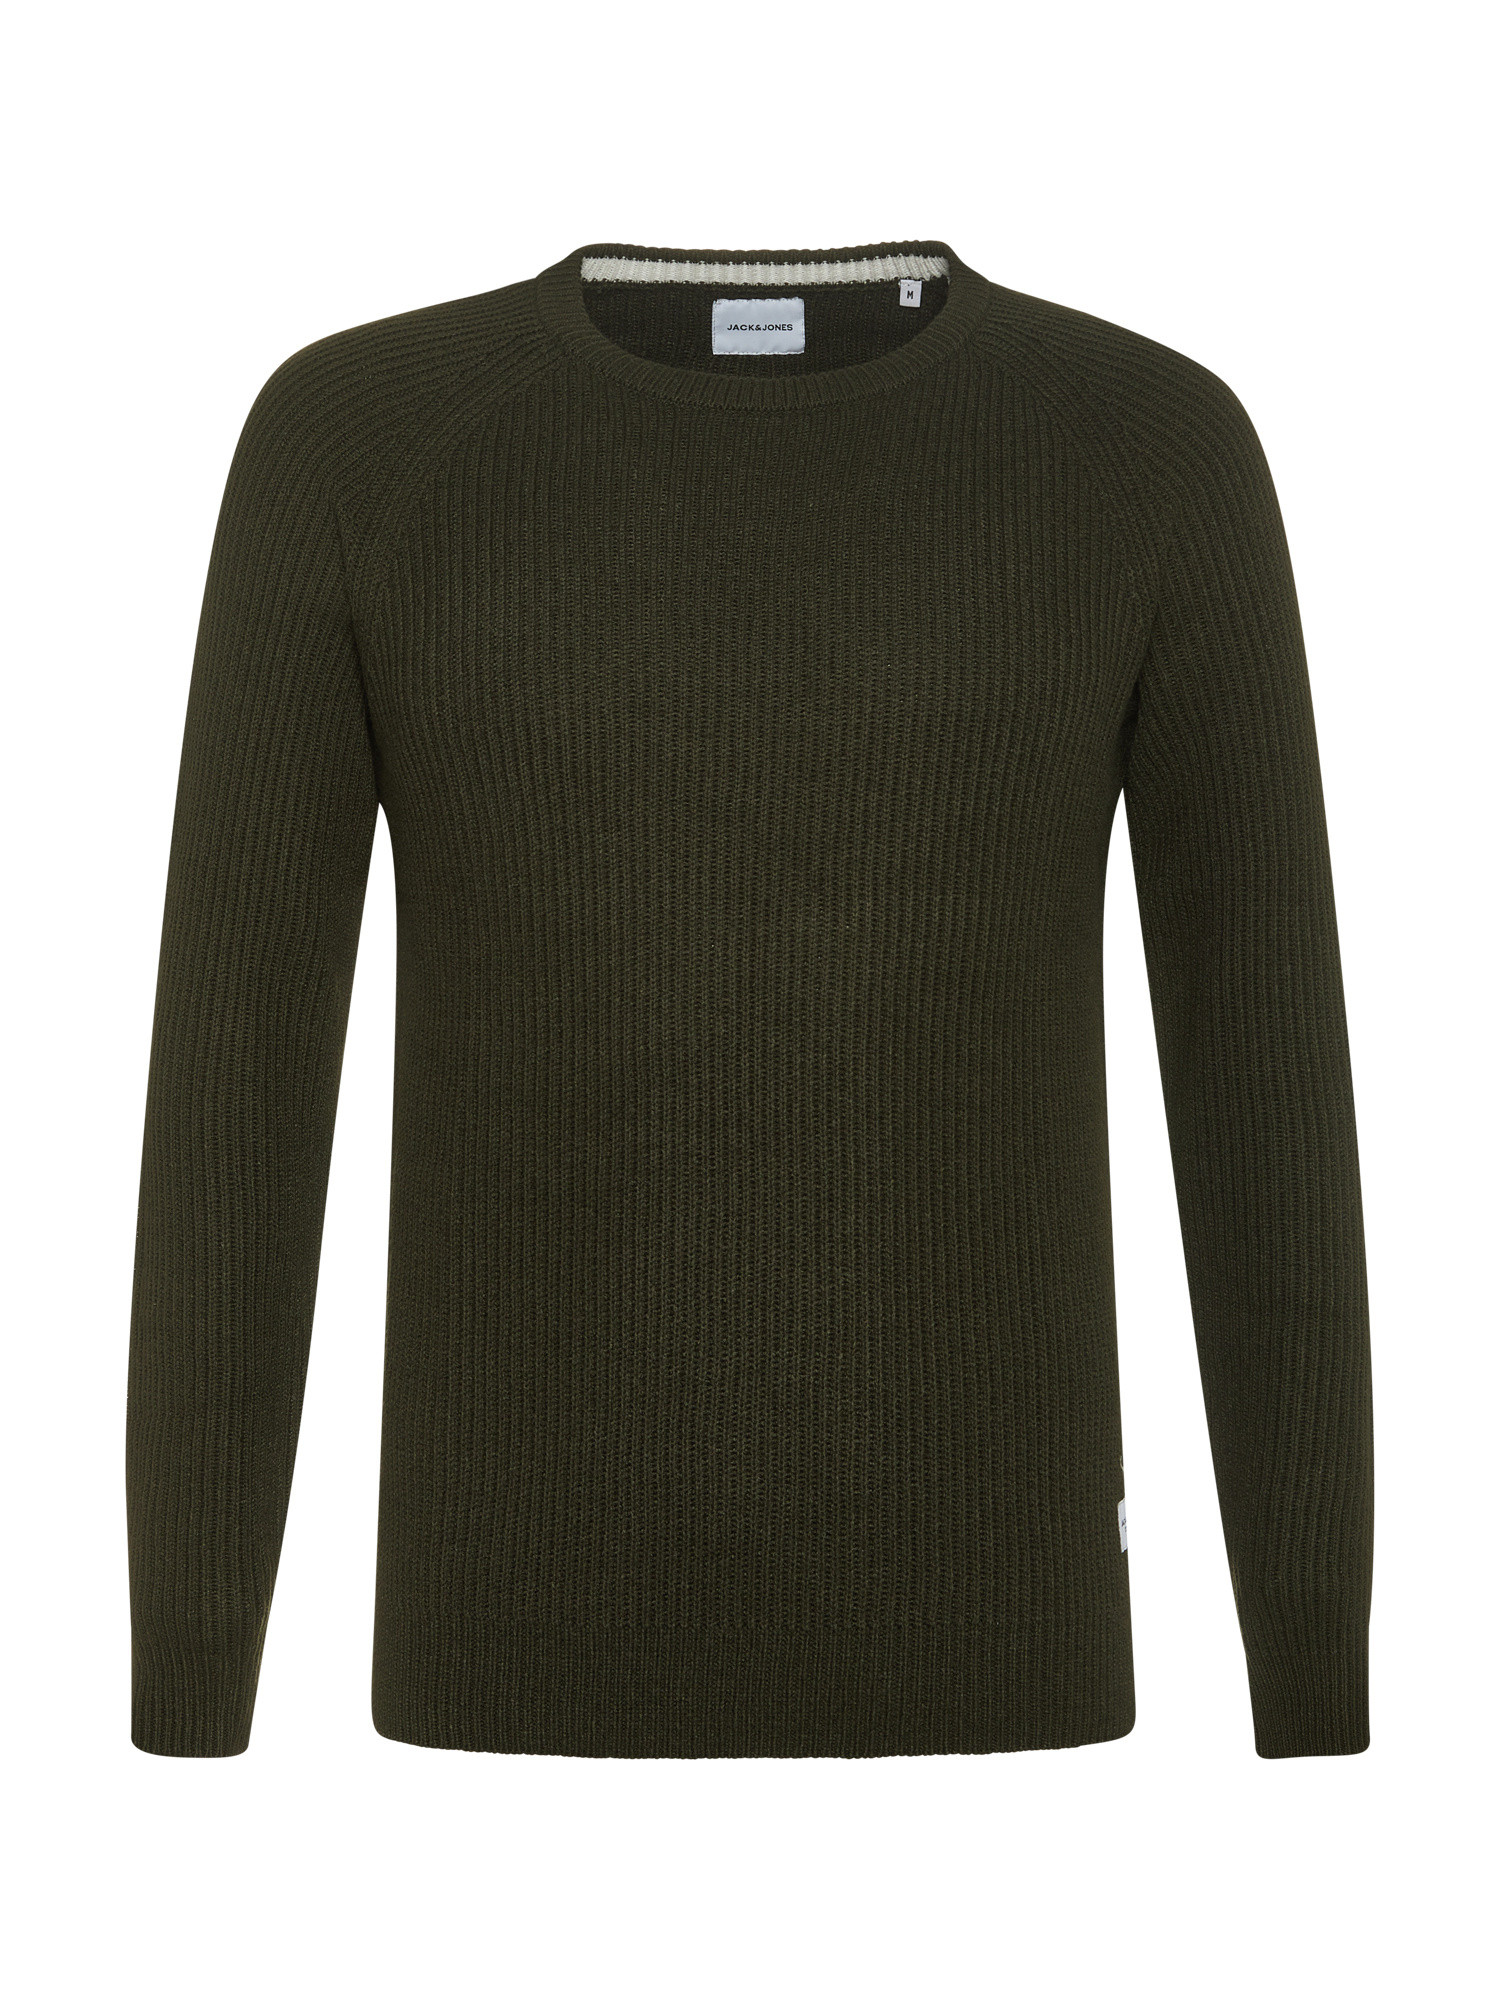 Jack & Jones Ribbed Knitted Sweater, Dark Green, large image number 0